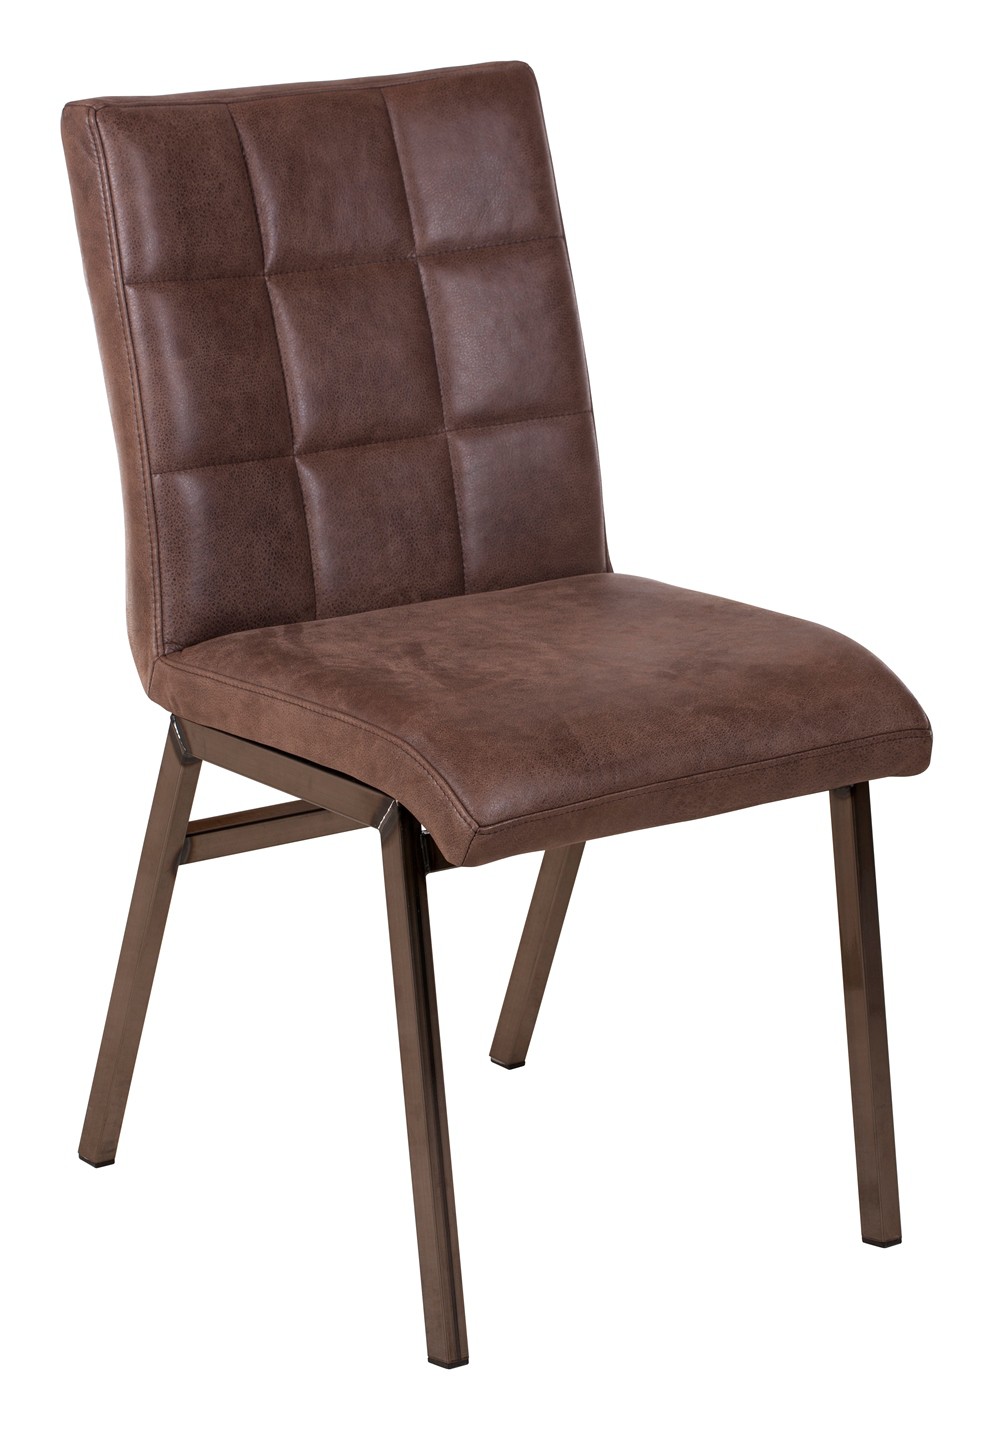 Fargo chair